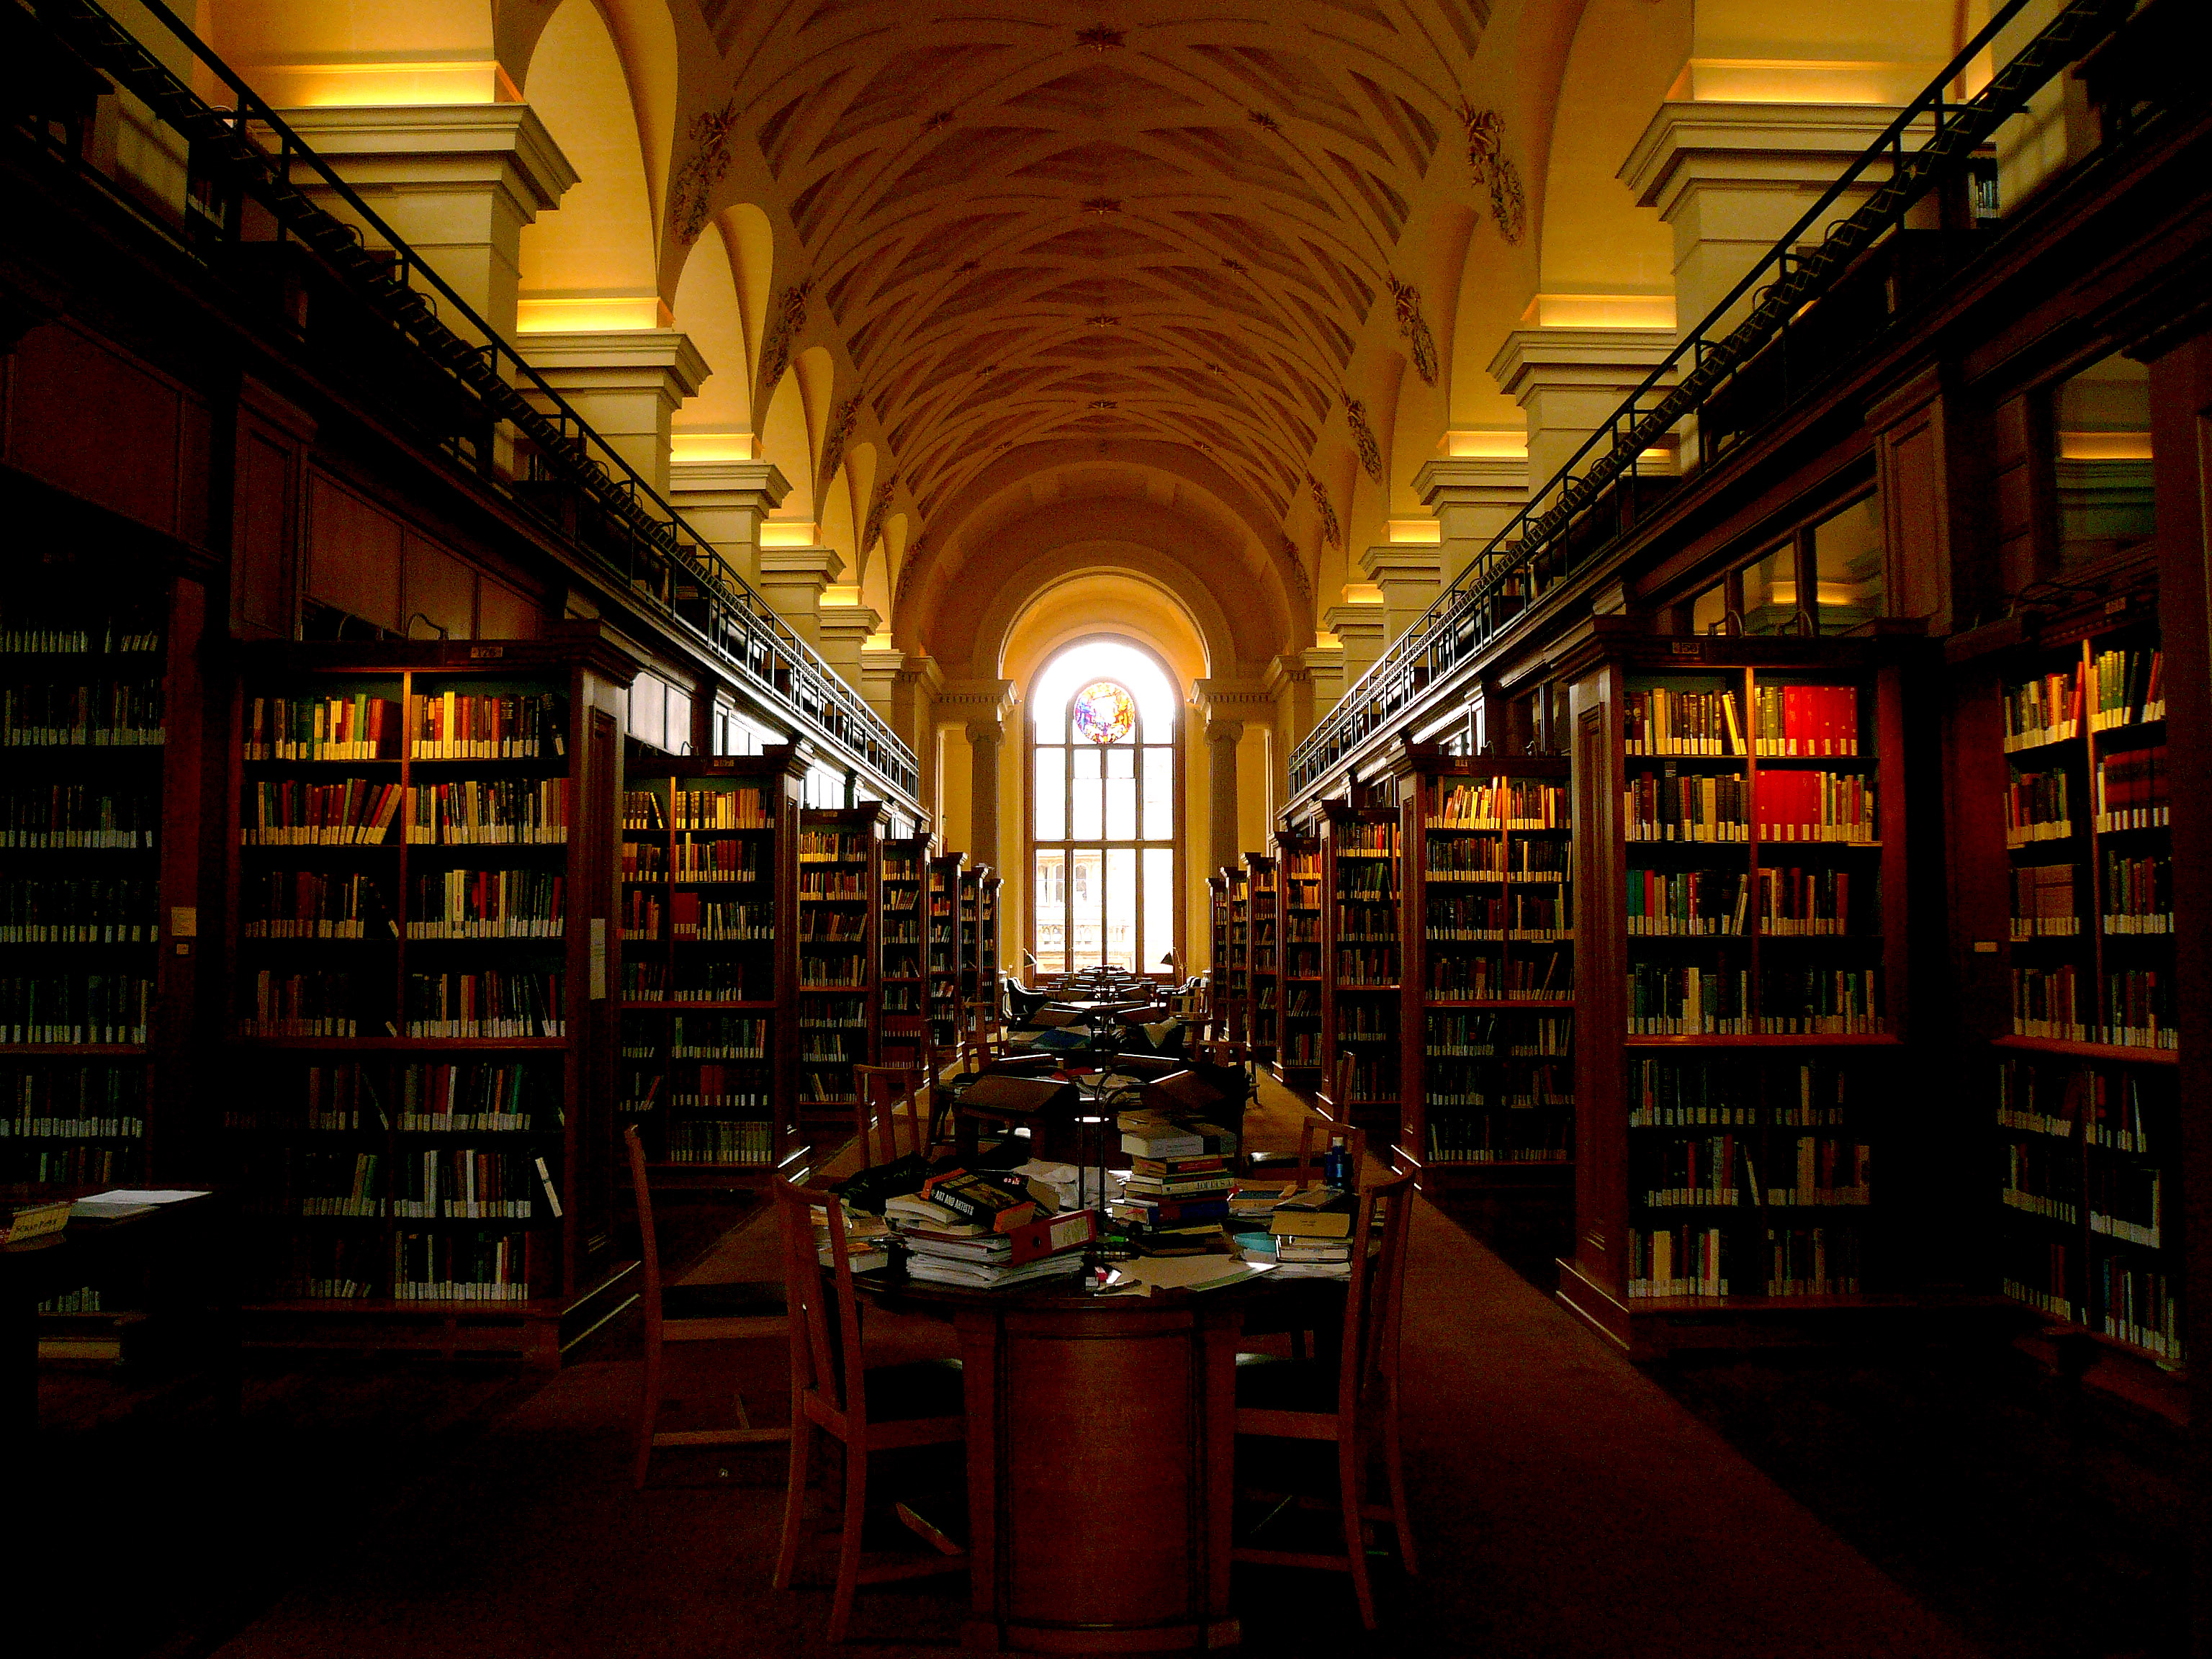 Attachment library. Библиотека Кембриджского университета. Кембриджская Университетская библиотека. Кембридж университет библиотека. Кембриджский университет внутри библиотека.